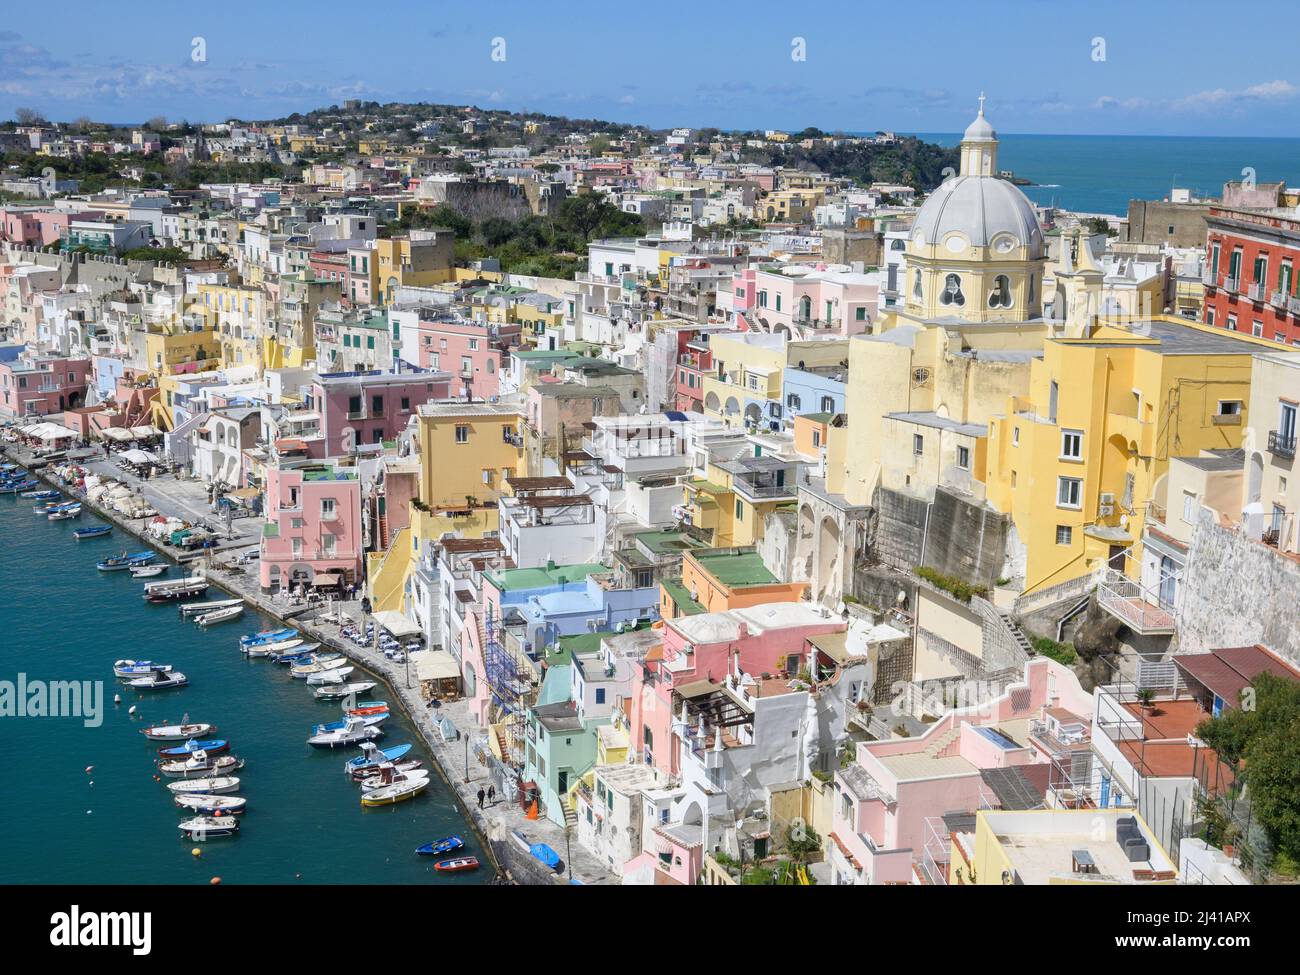 Marina Corricella on the island of Procida, the 2022 Italian Capital of Culture, in the Bay of Naples Campania Italy Stock Photo